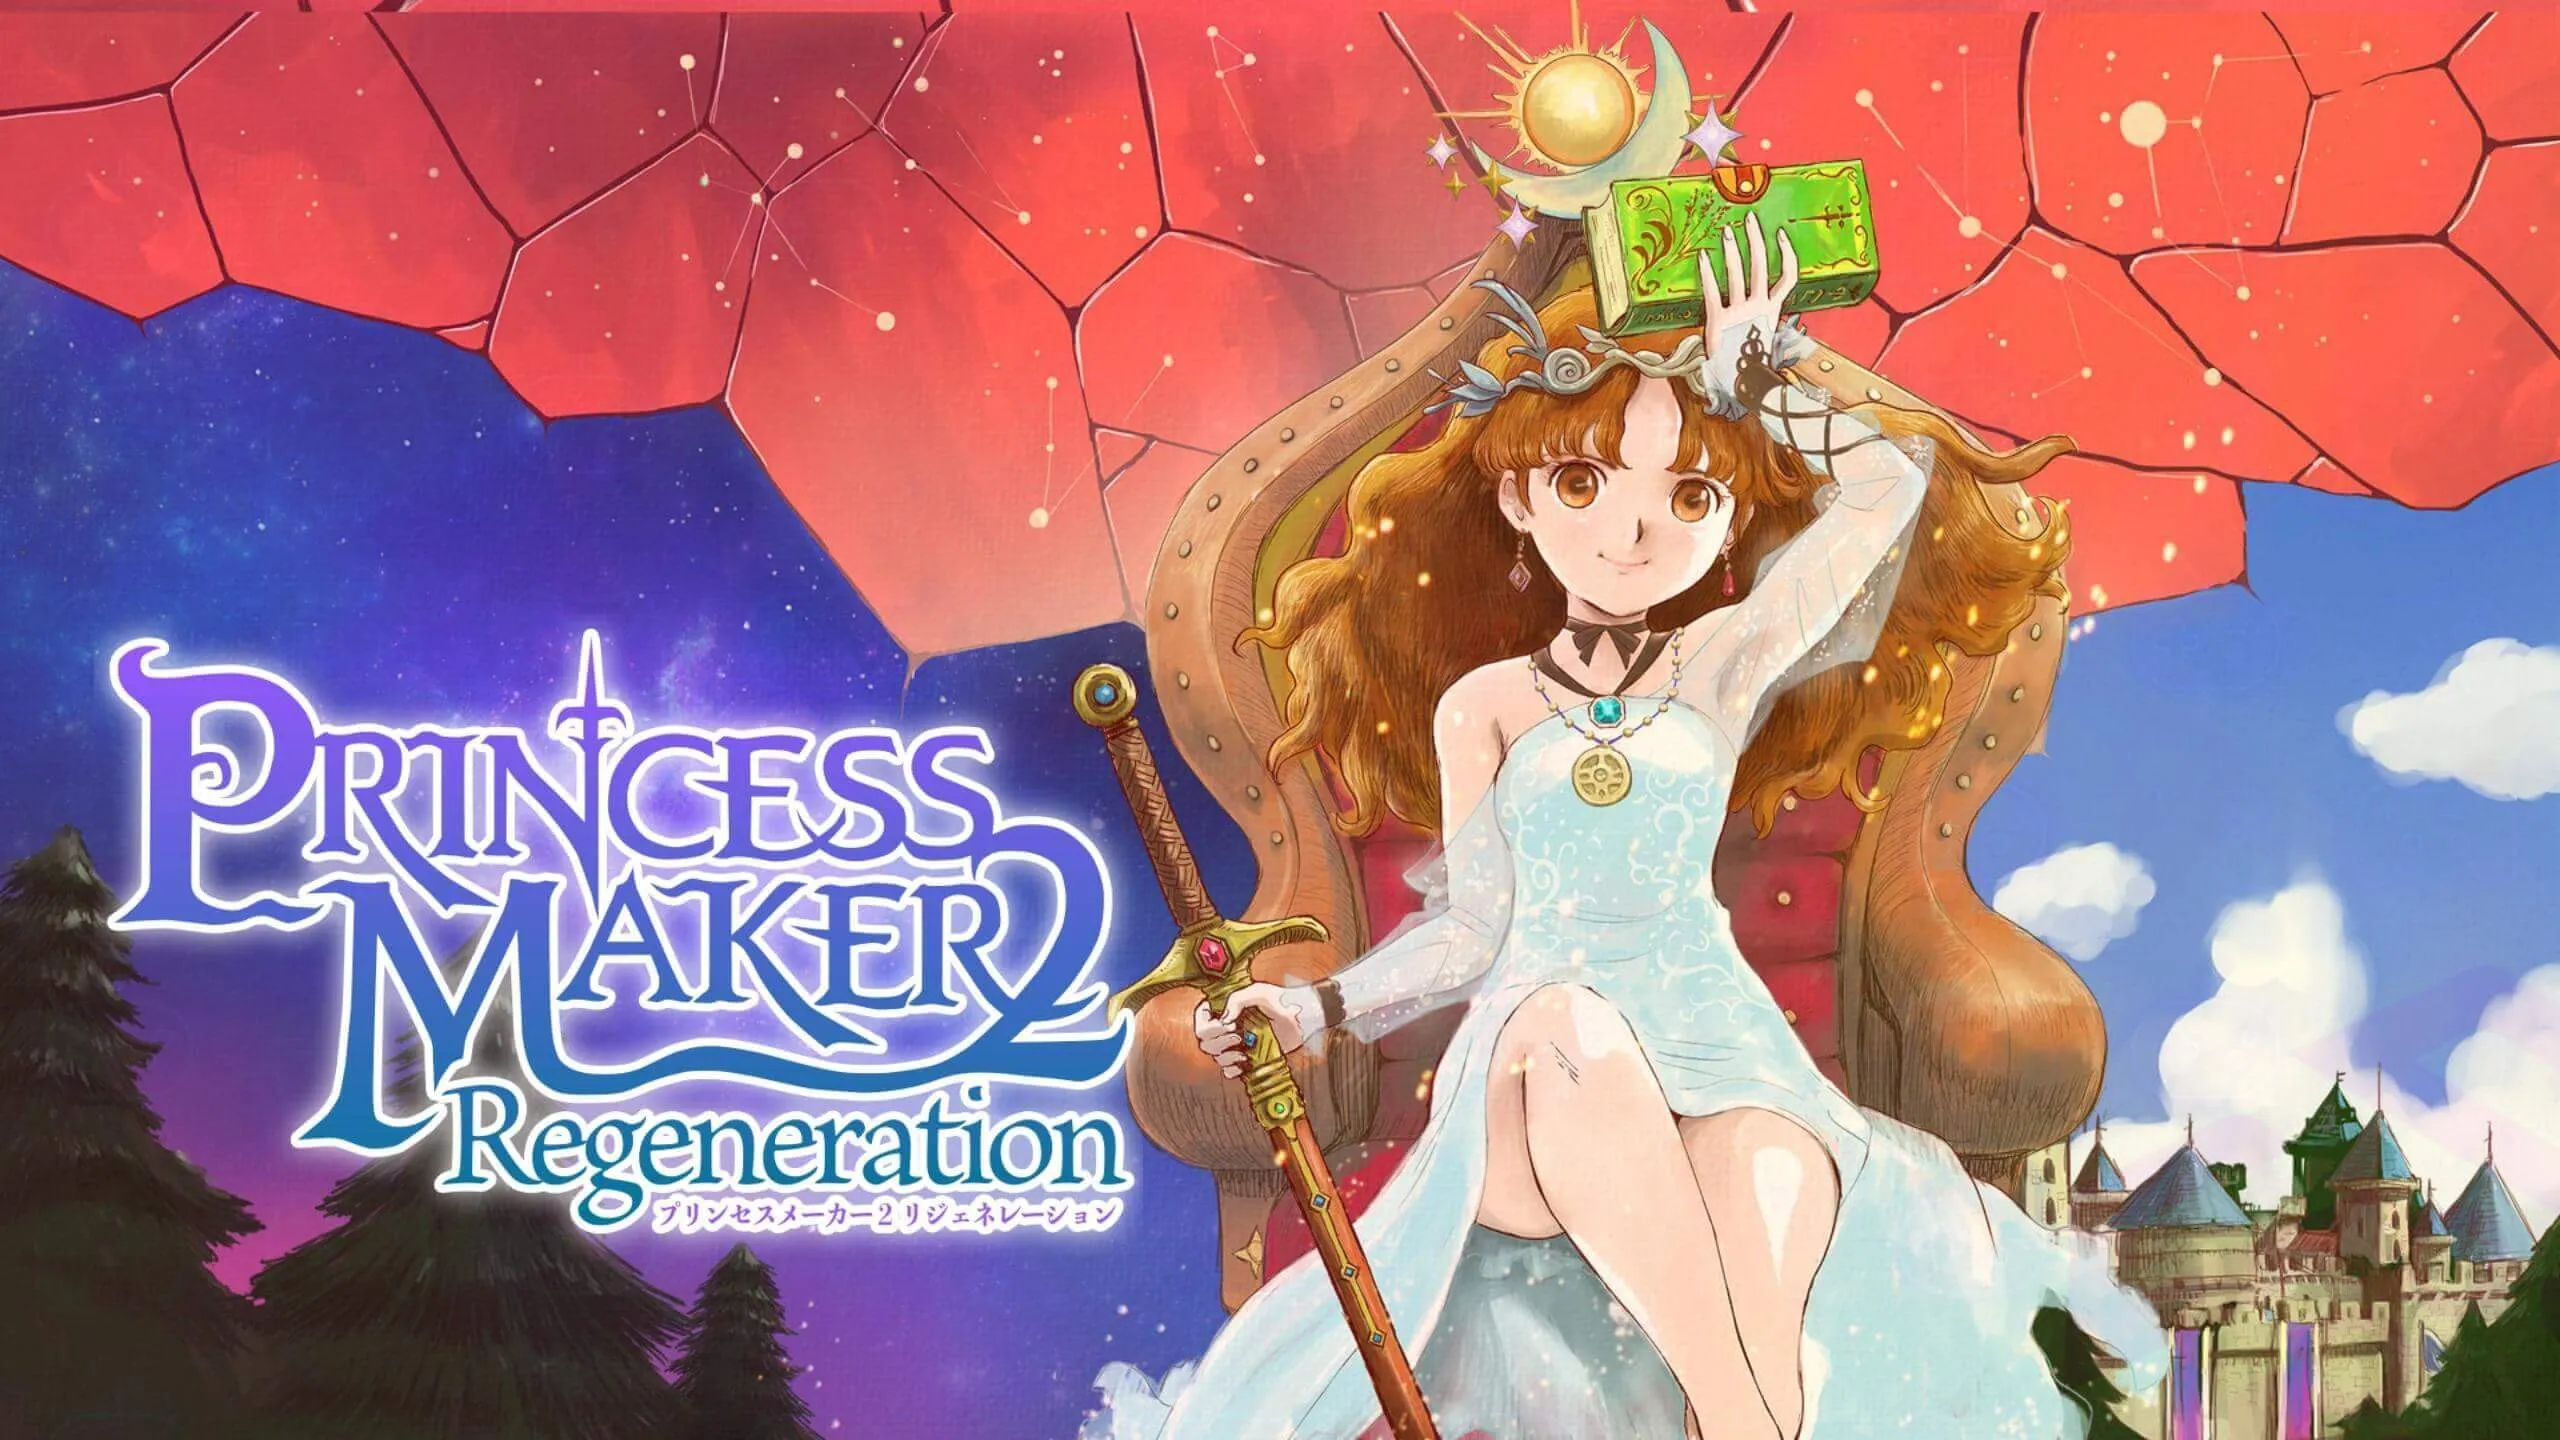 Princess Maker 2 Regeneration keyart teaser